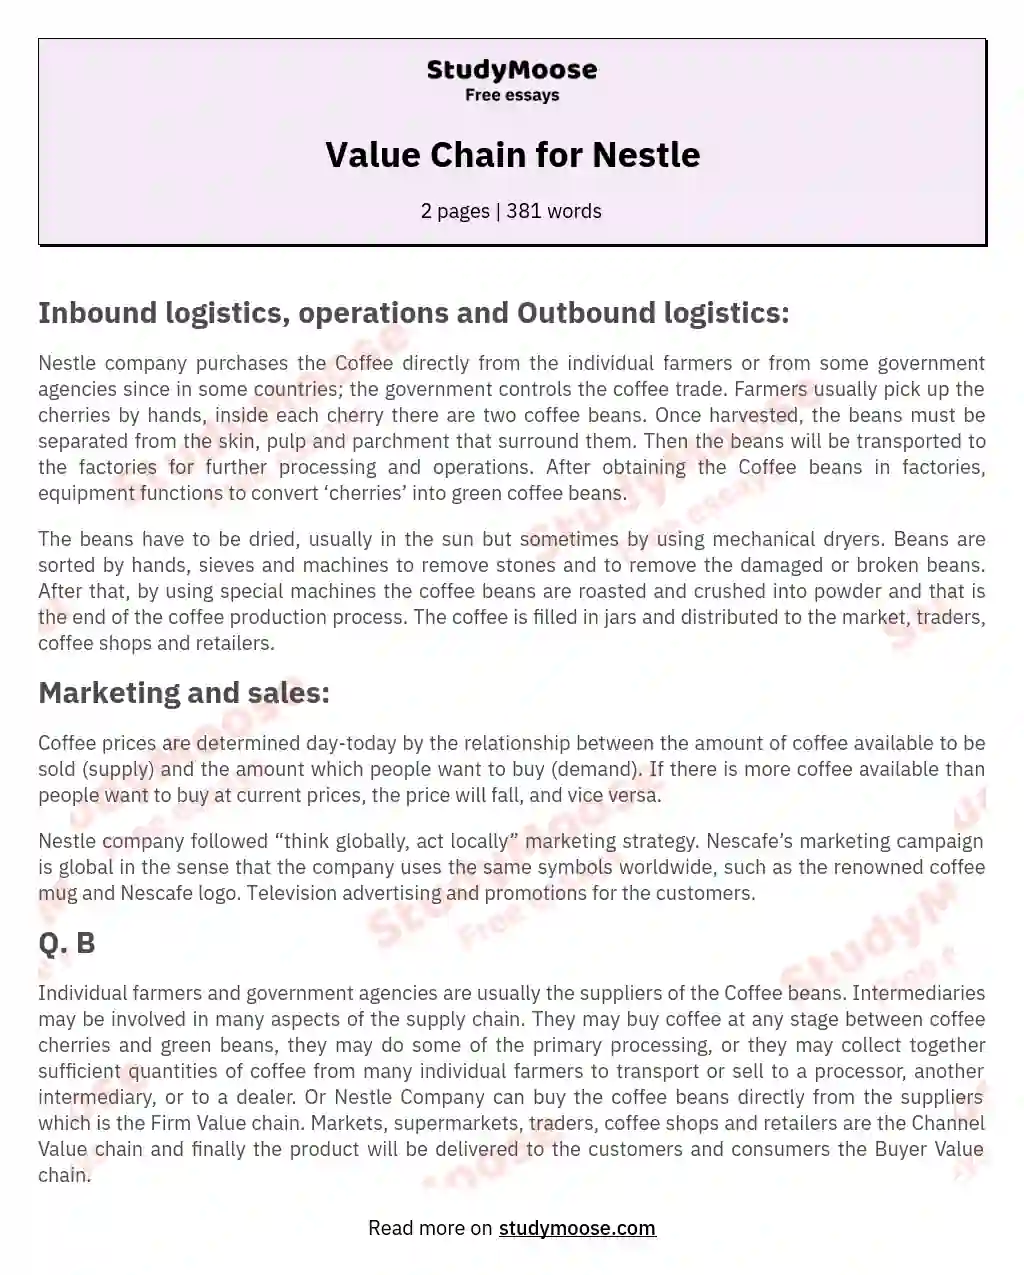 Value Chain for Nestle essay